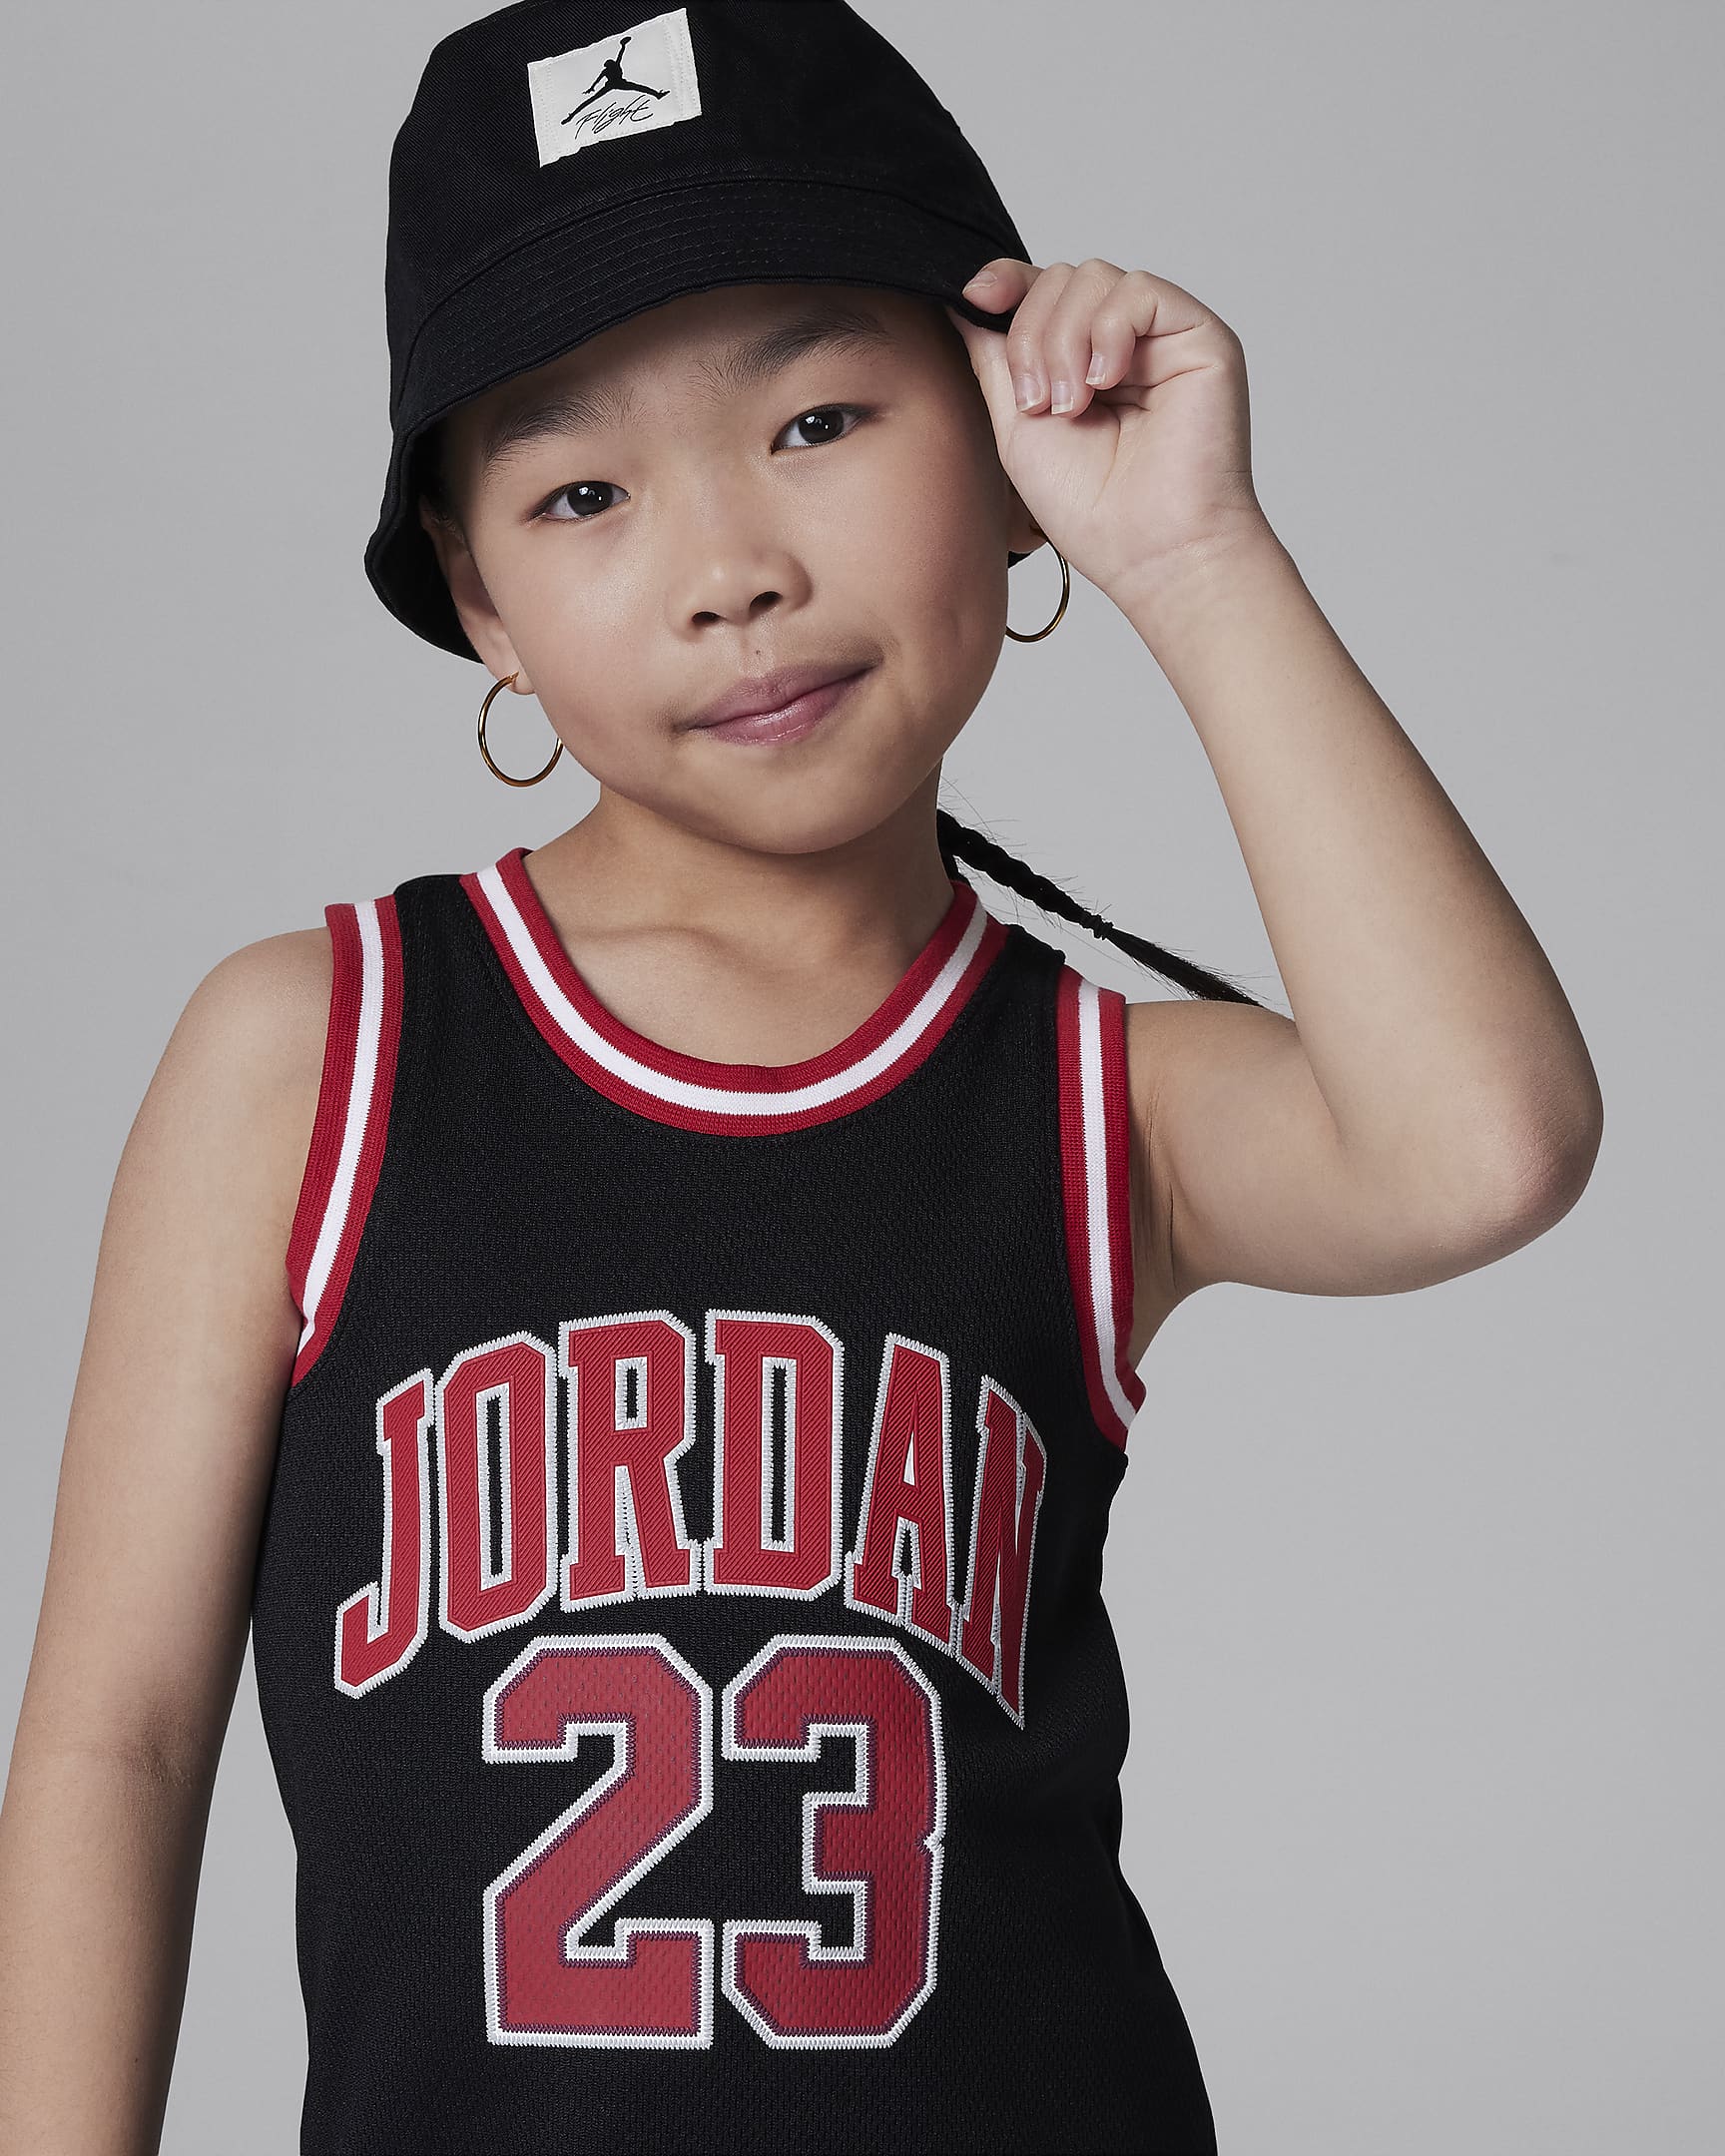 Jordan 23 Jersey Younger Kids' Dress - Black